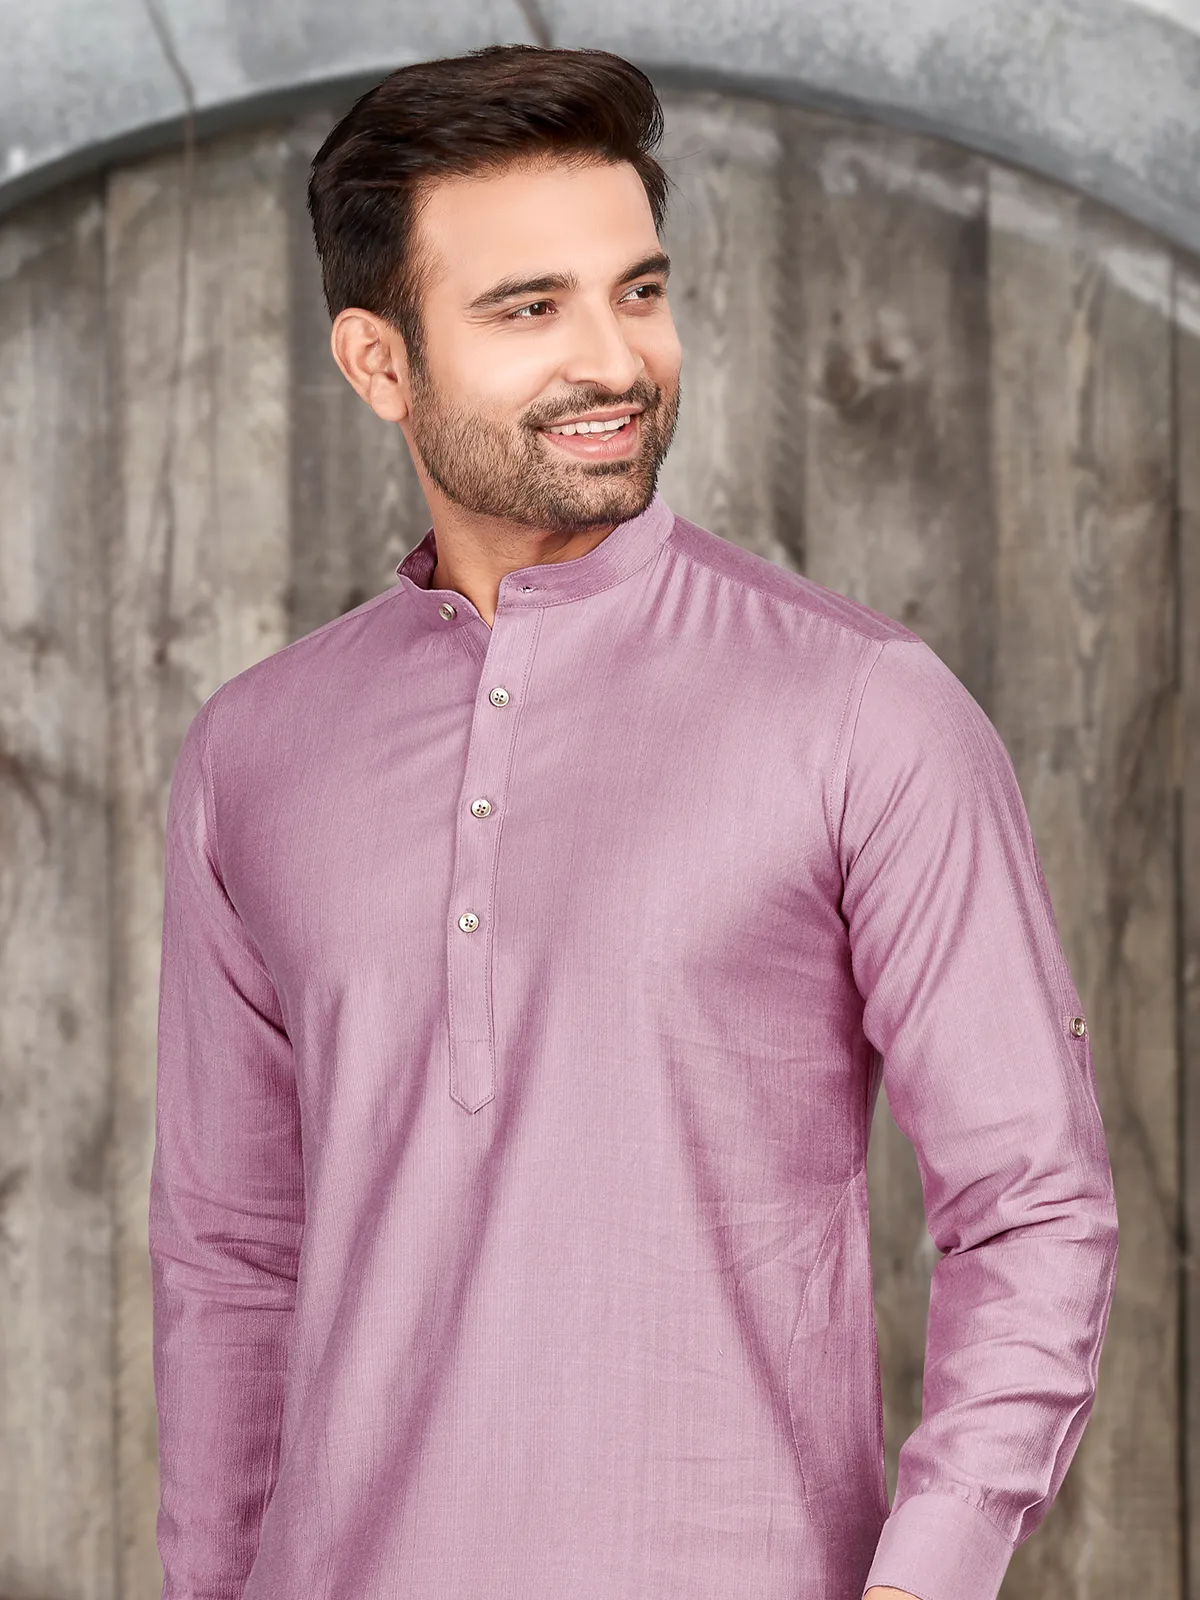 Mauve pink plain silk kurta suit